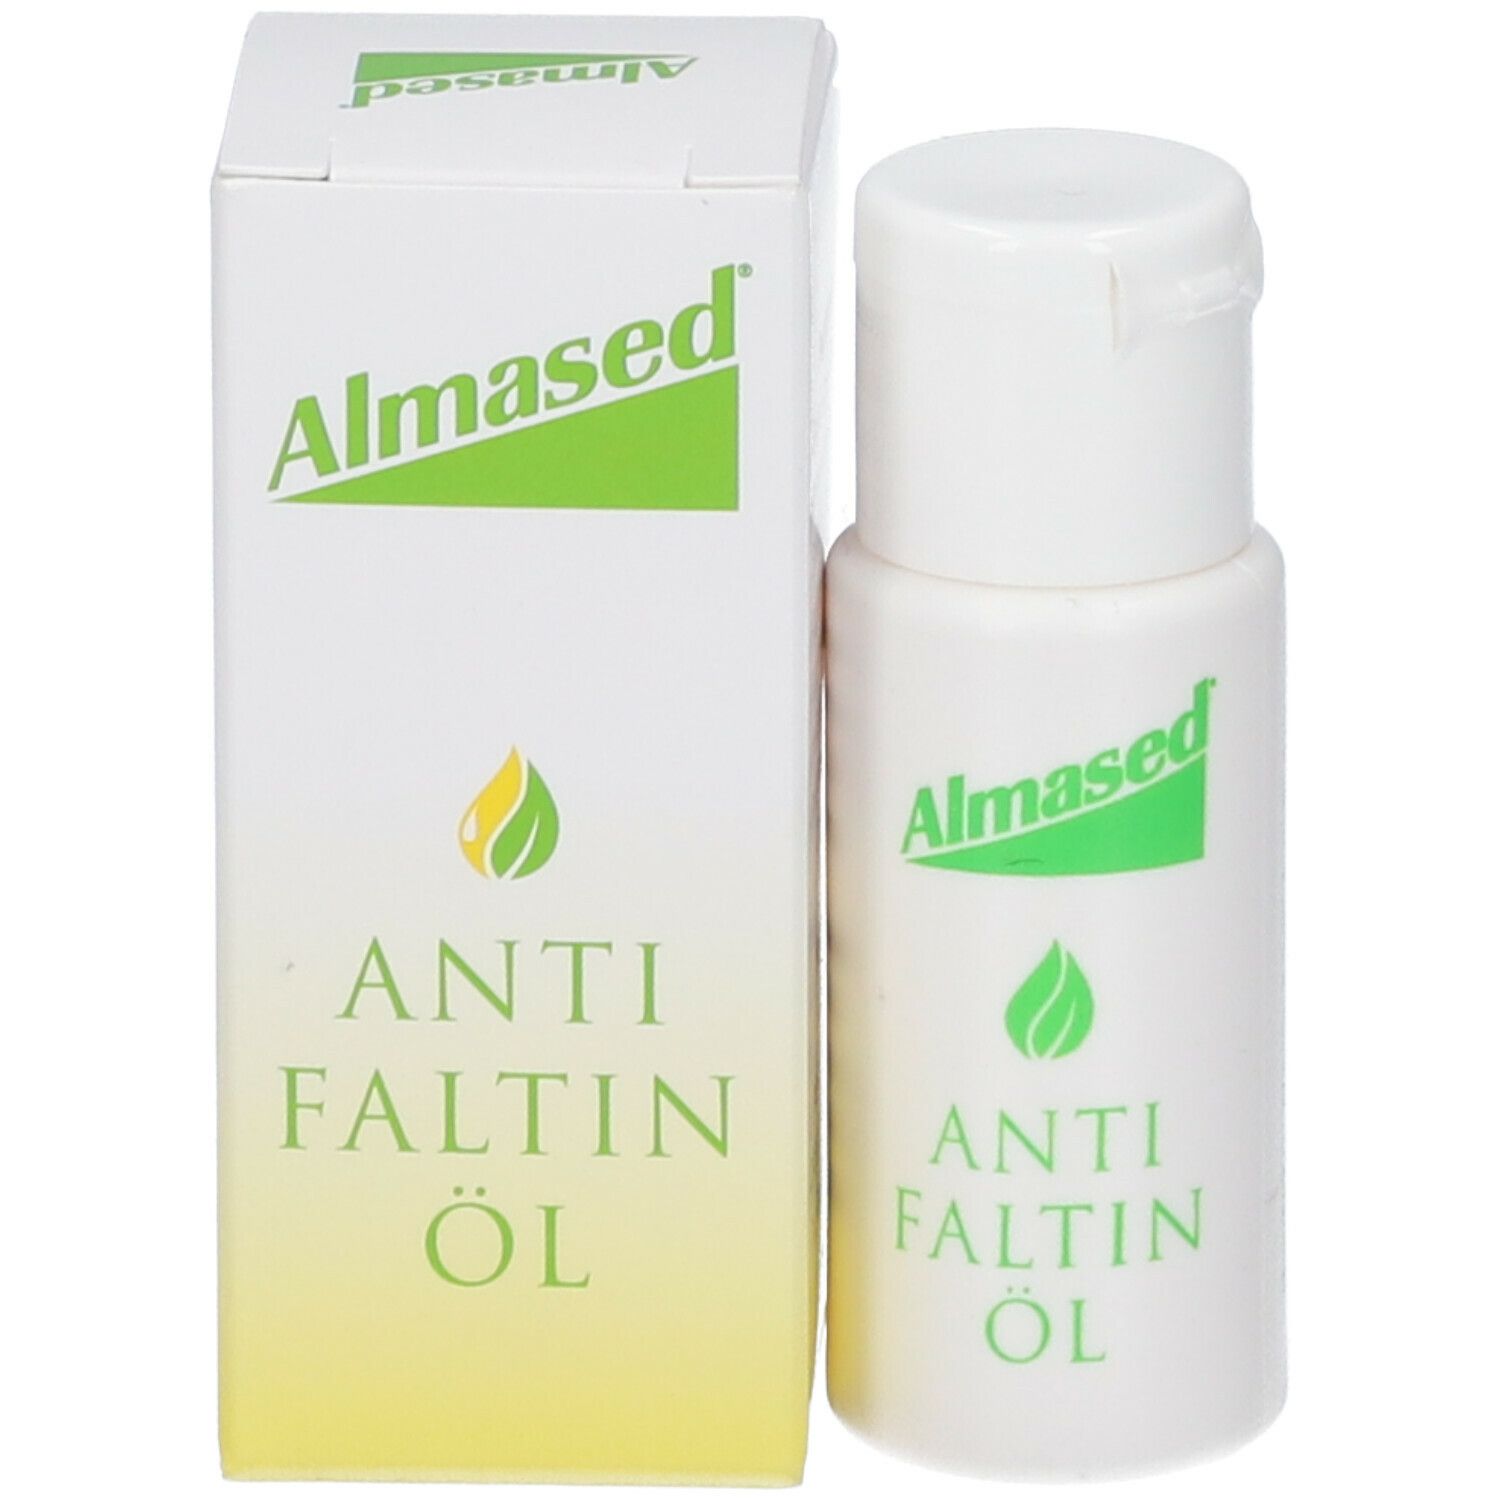 Almased® Antifaltin Öl